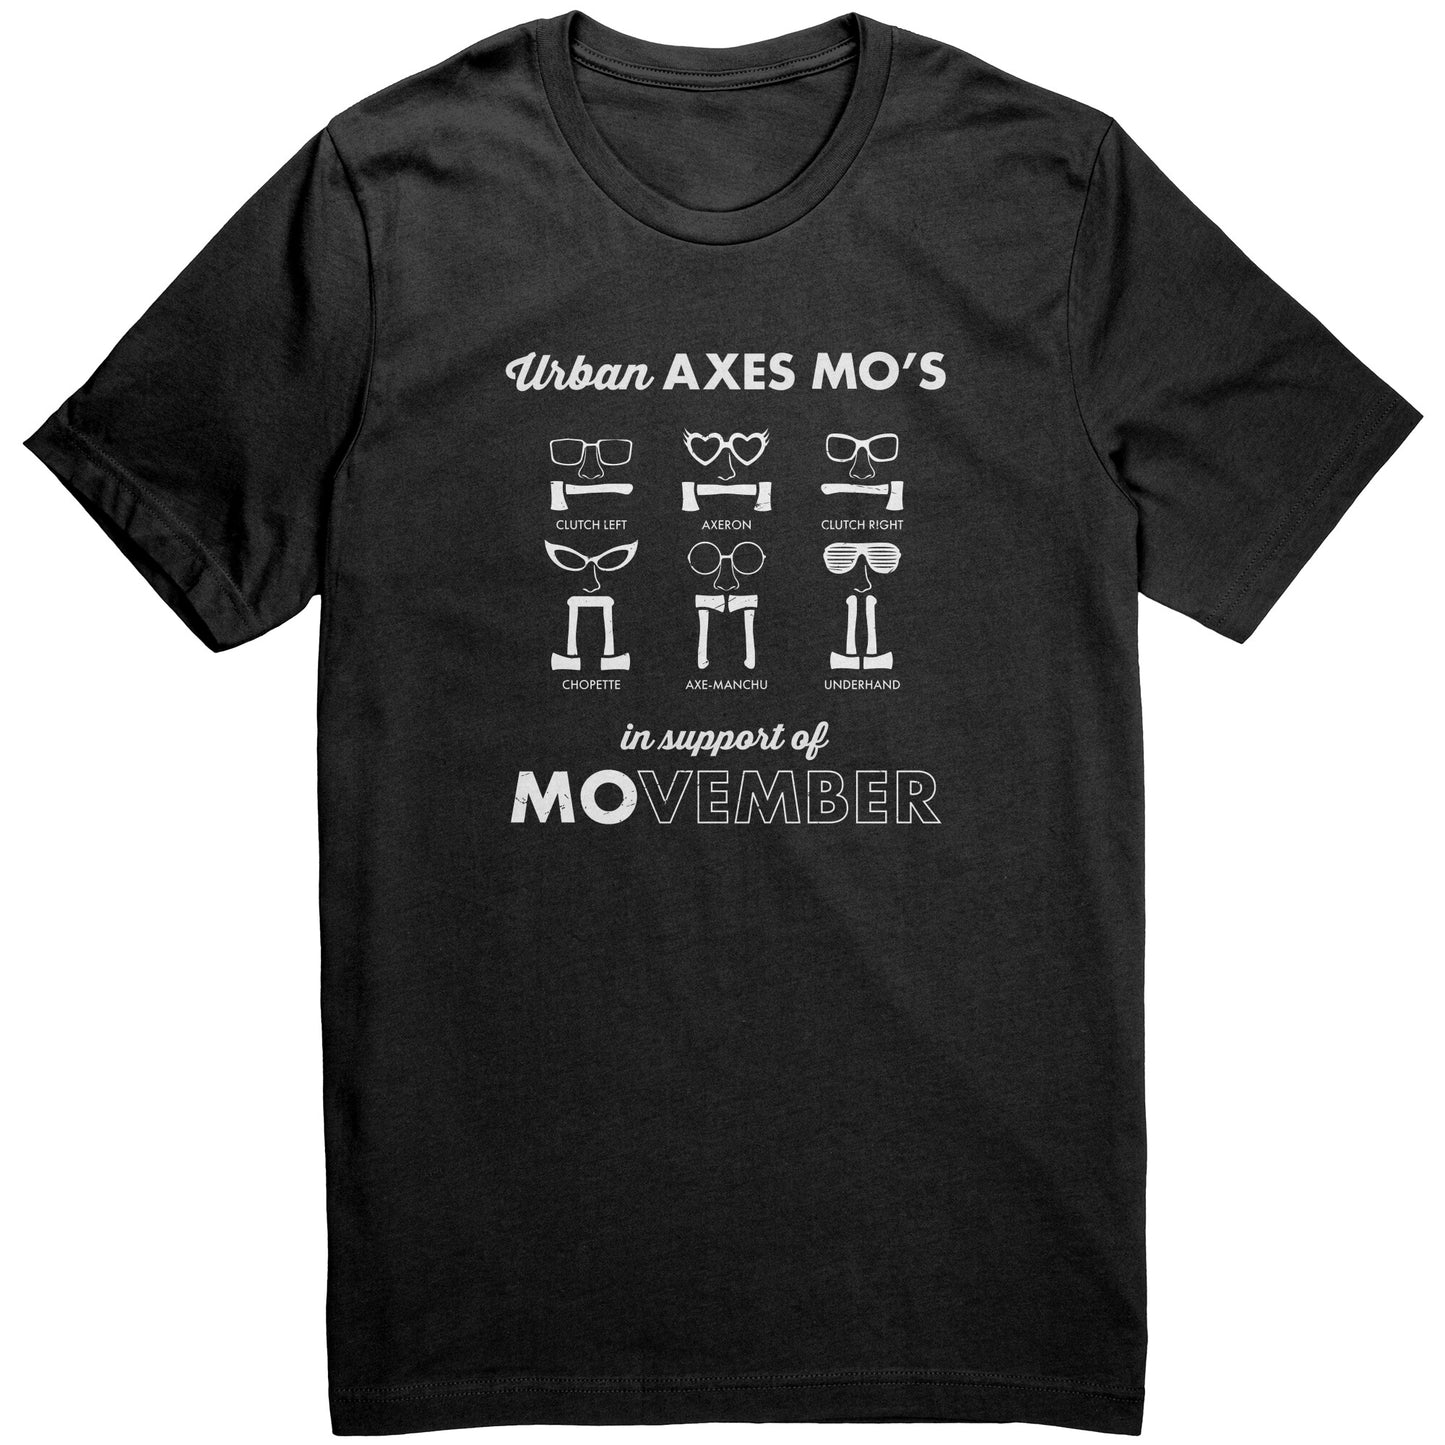 Mo' Axe Throwing - Canvas Unisex T-Shirt